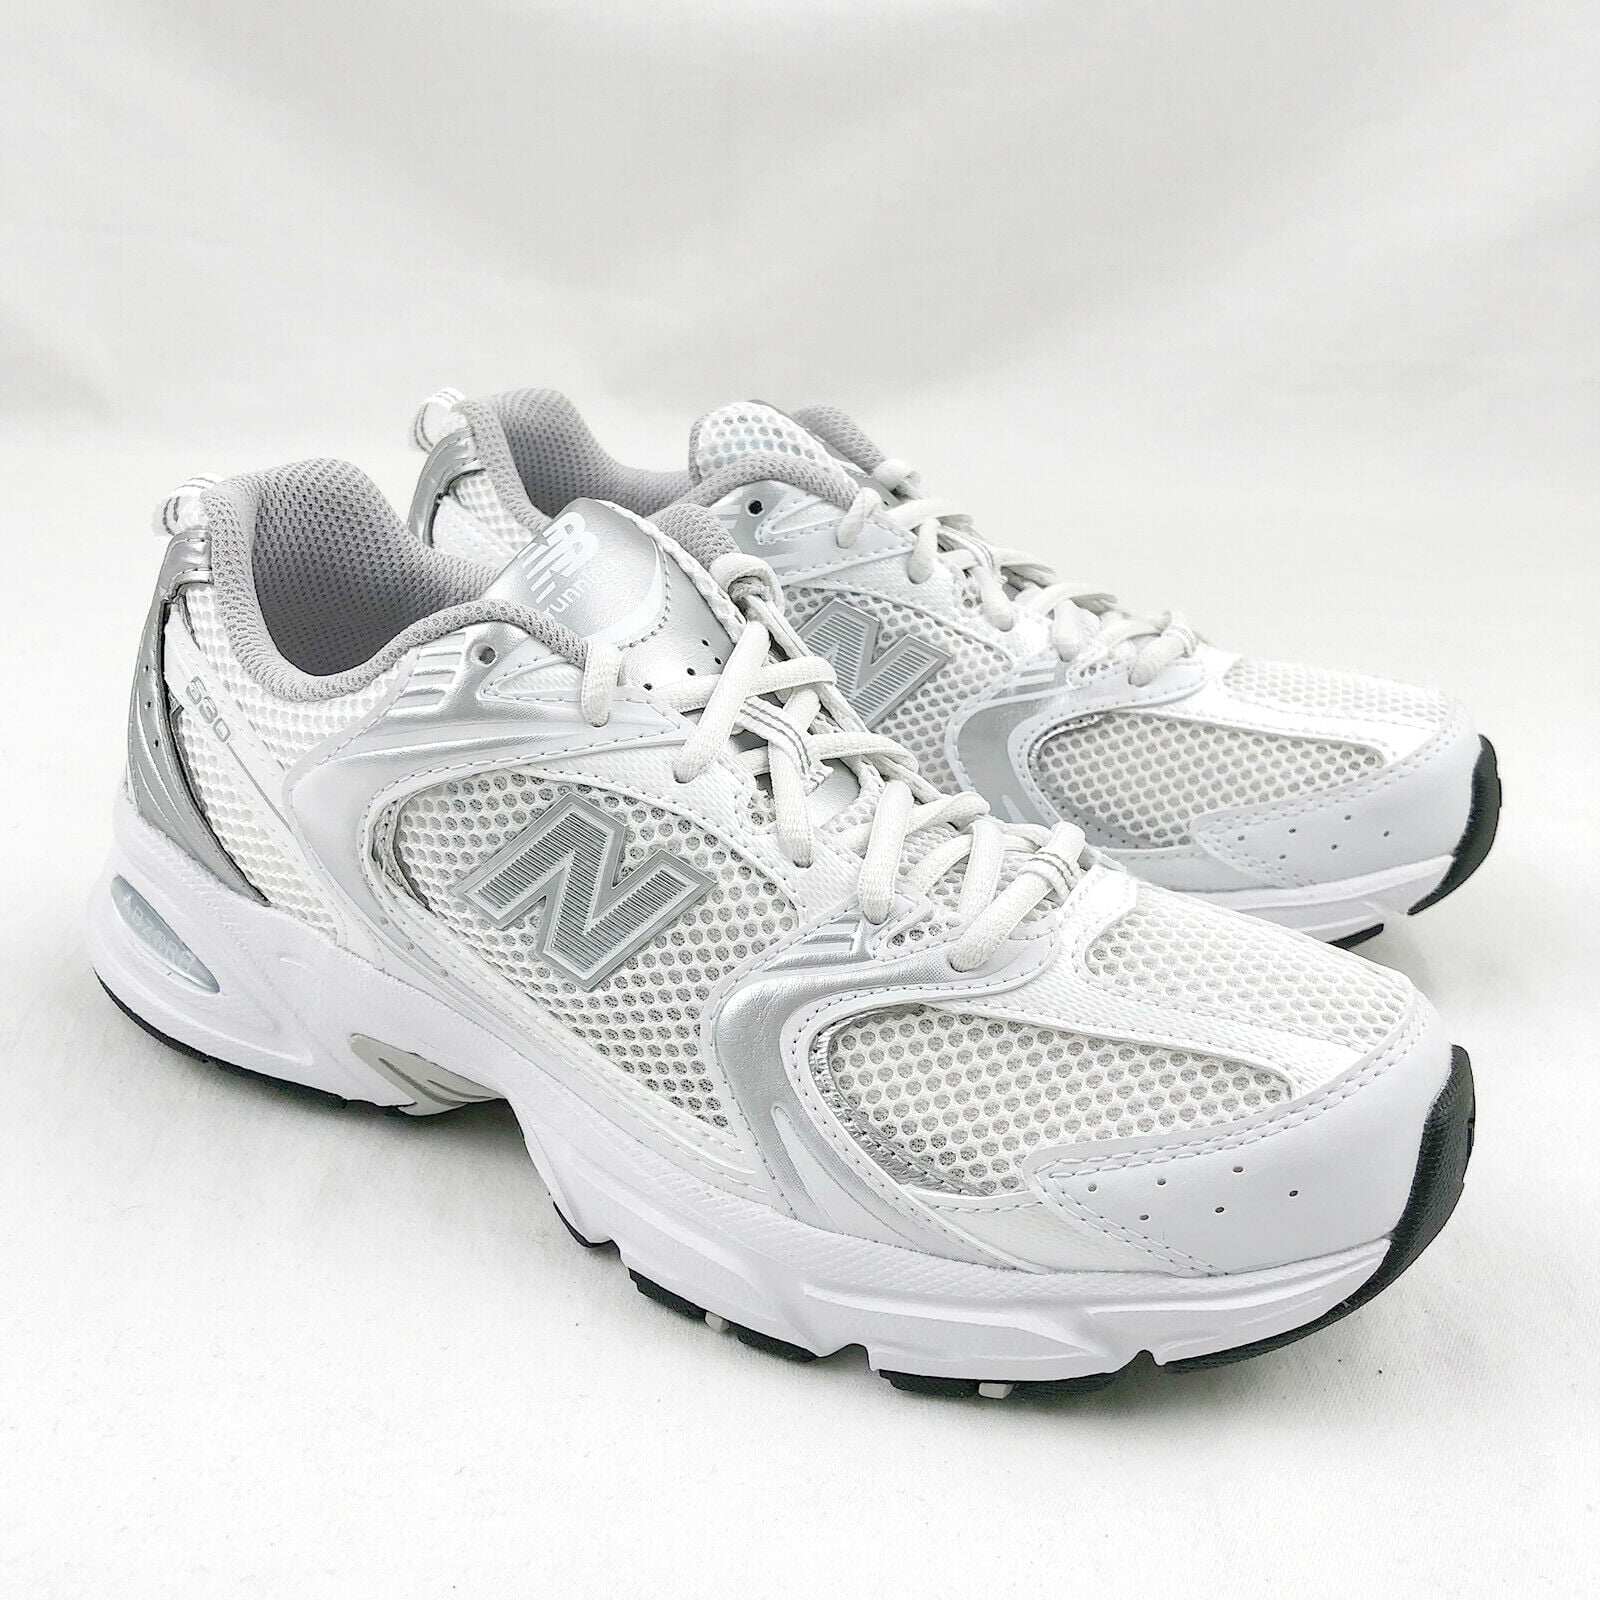 New Balance - New Balance 530 Retro White Silver Running Shoes Men's ...